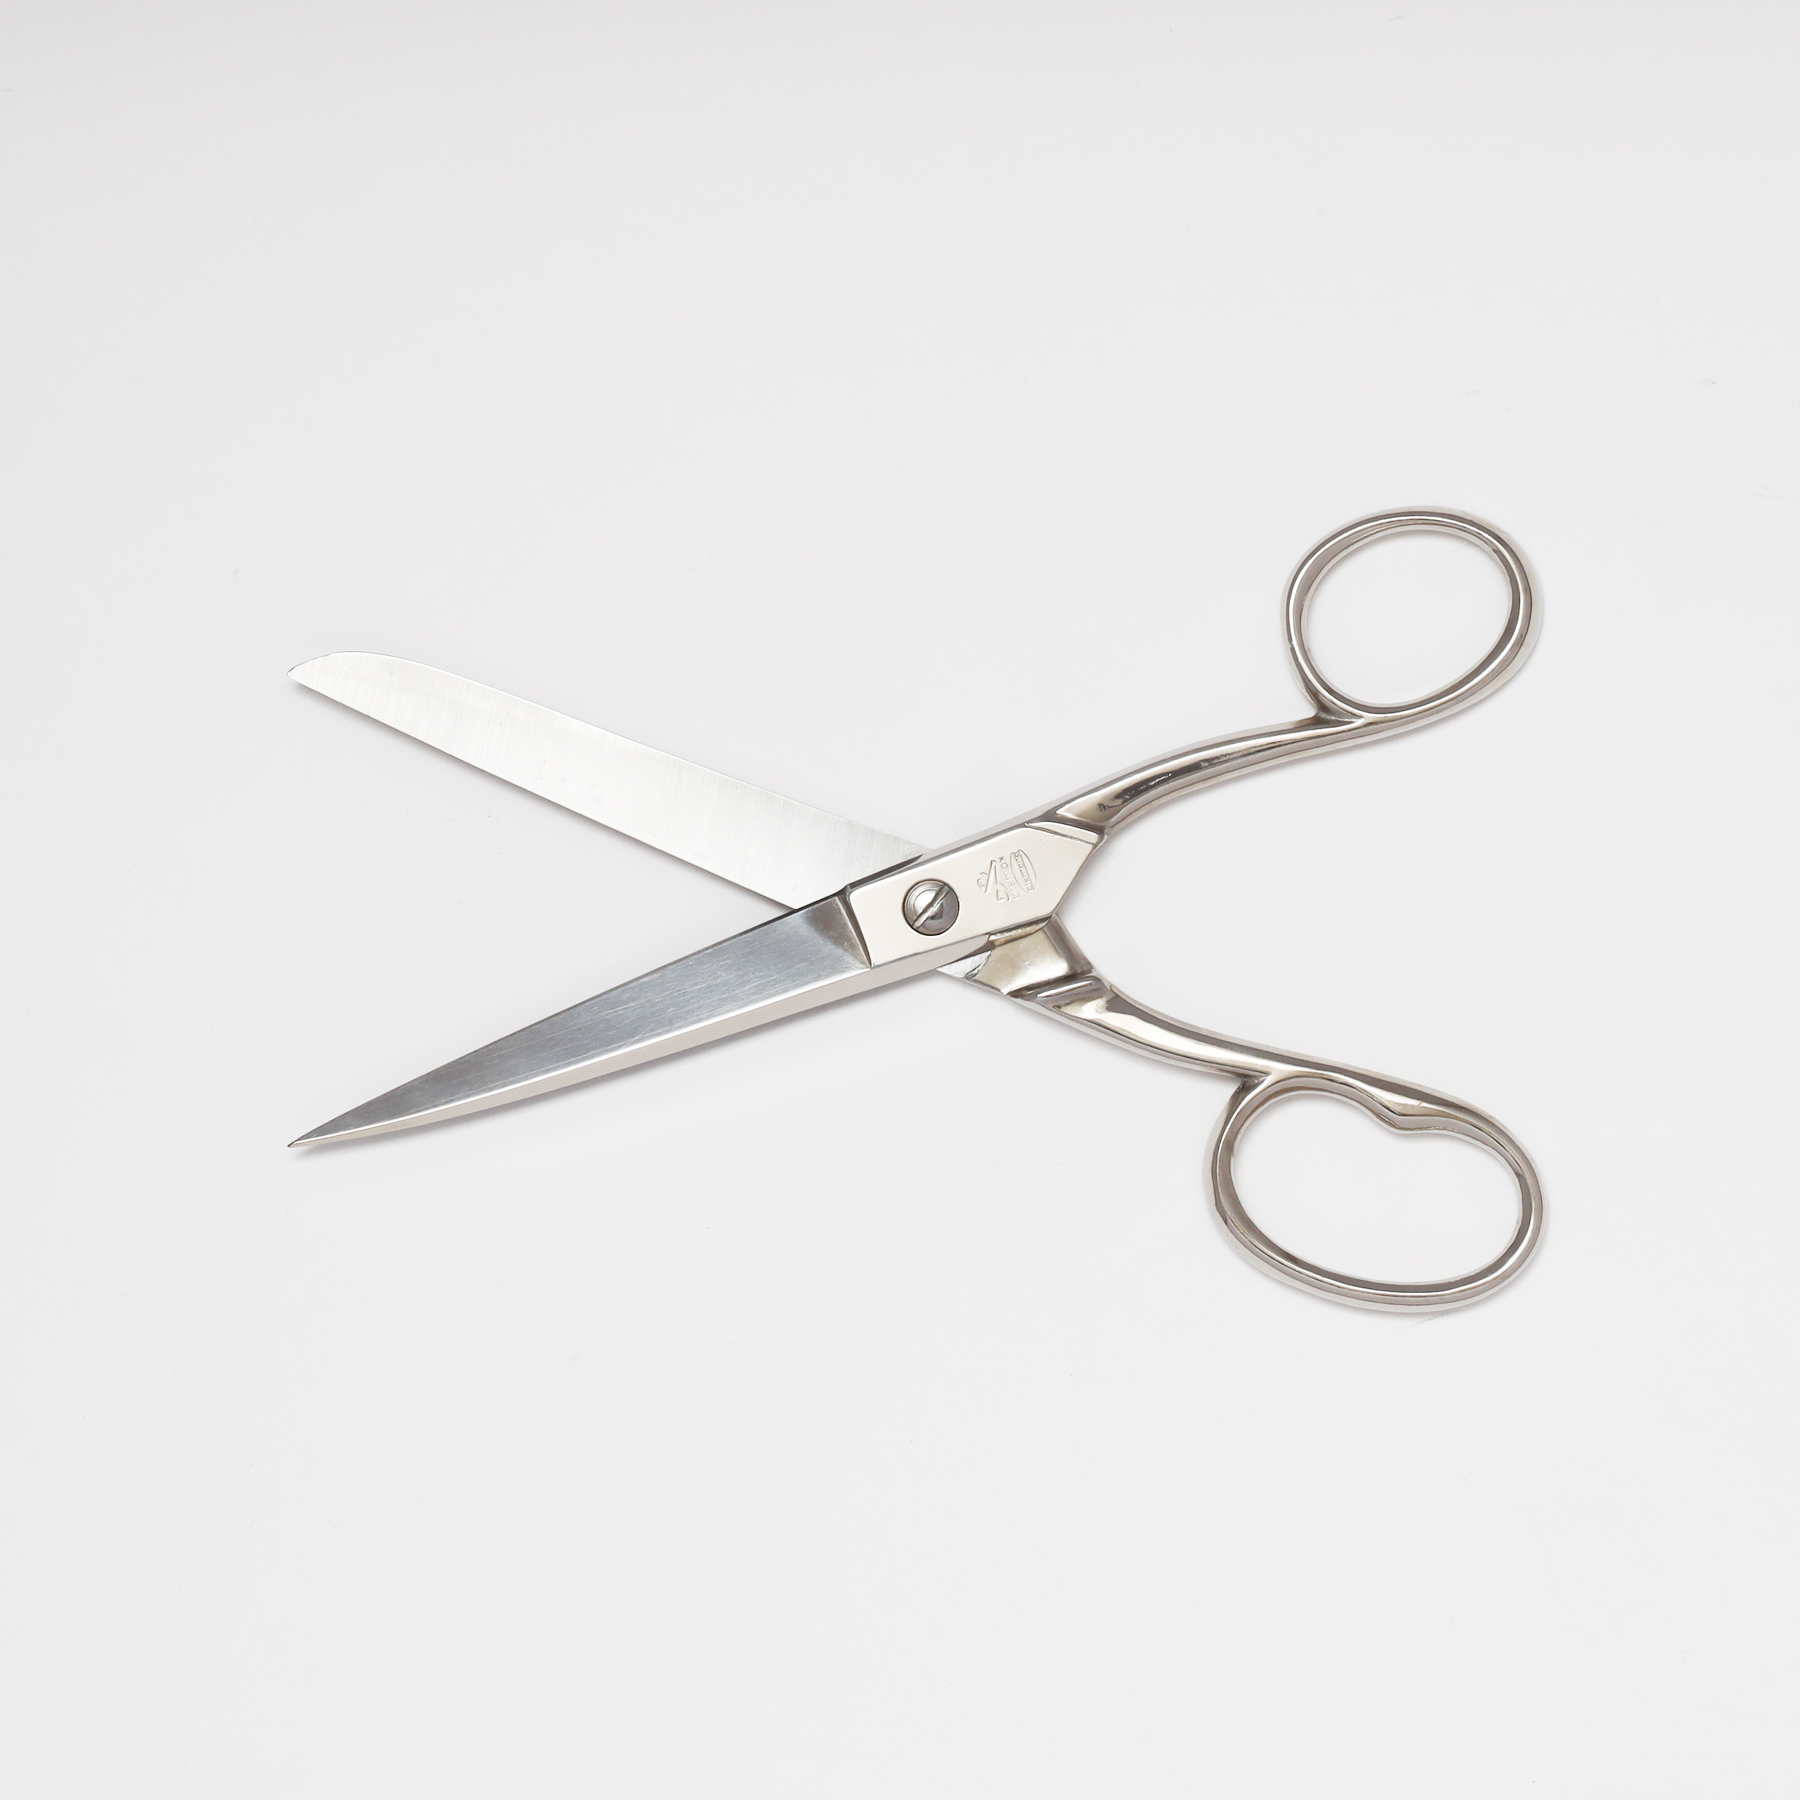 Sewing Scissors - Dressmaker (20cm)